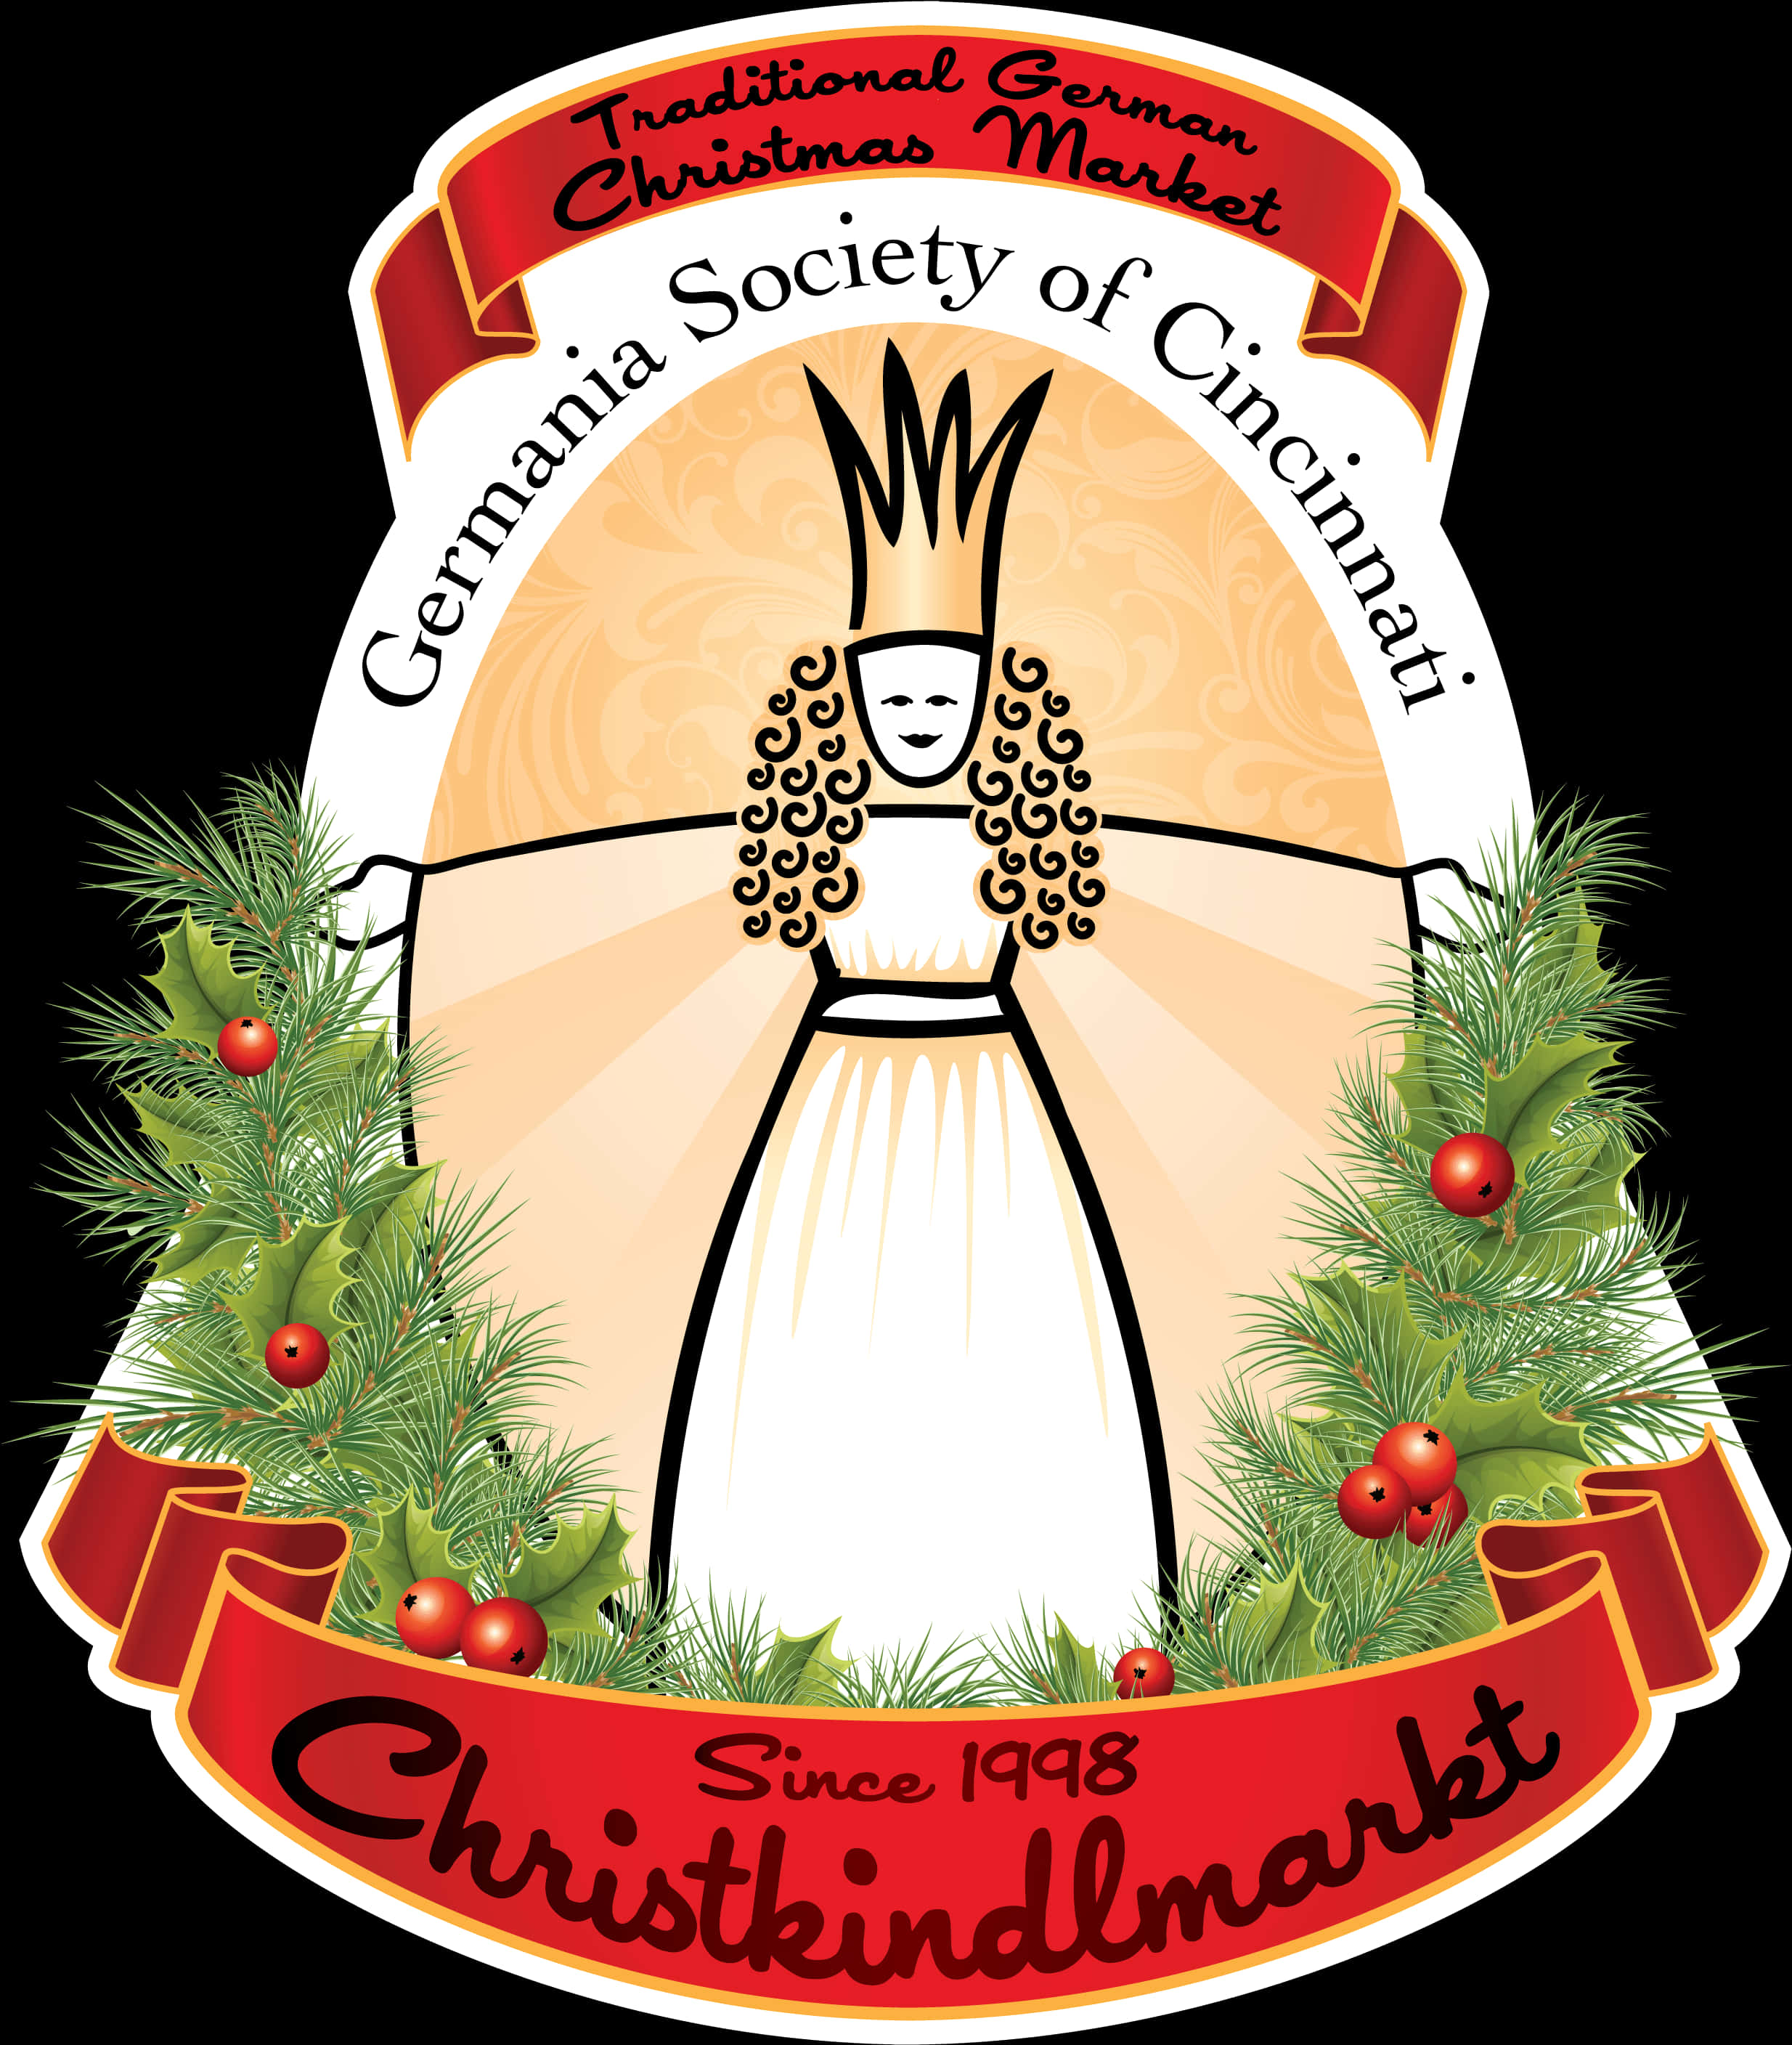 Germania Christkindlmarkt Cincinnati Logo